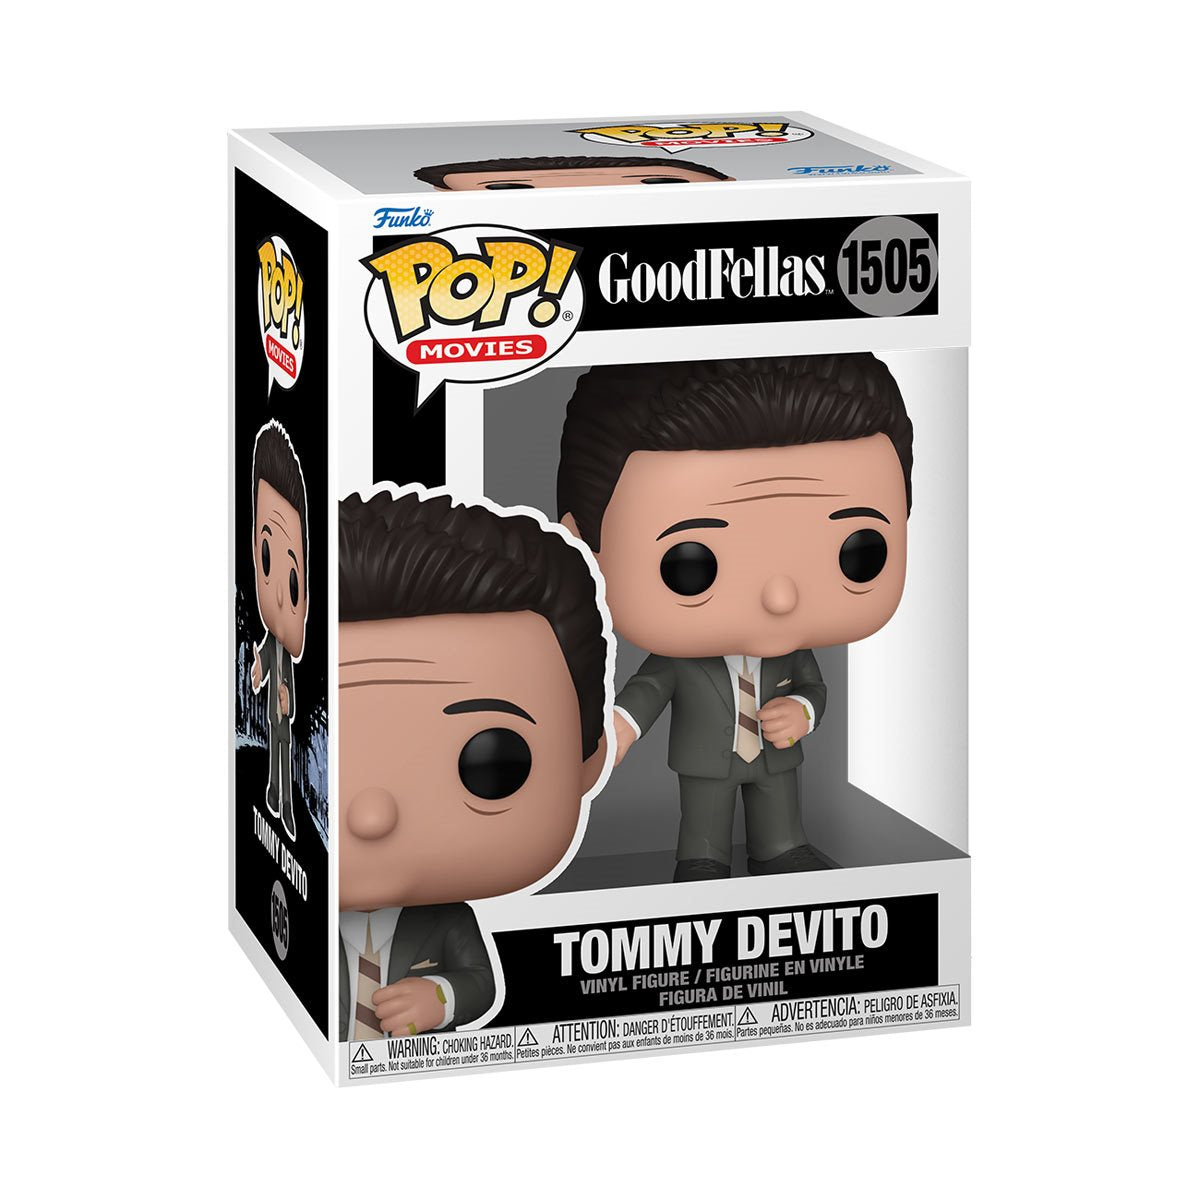 Pop! Movies 1505 GoodFellas: Tommy DeVito